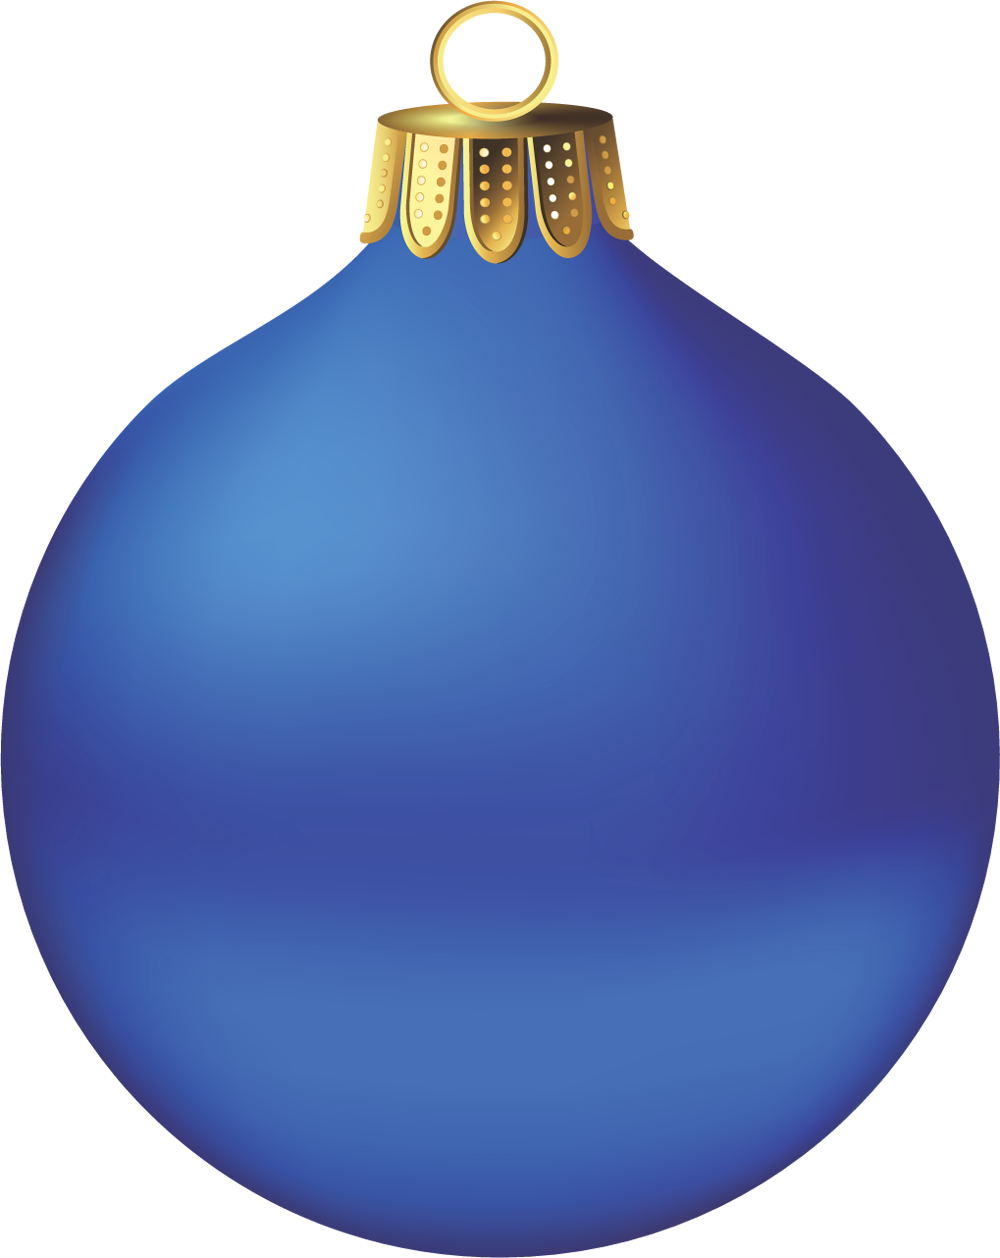 Xmas Stuff For > Christmas Ornament Design Clipart